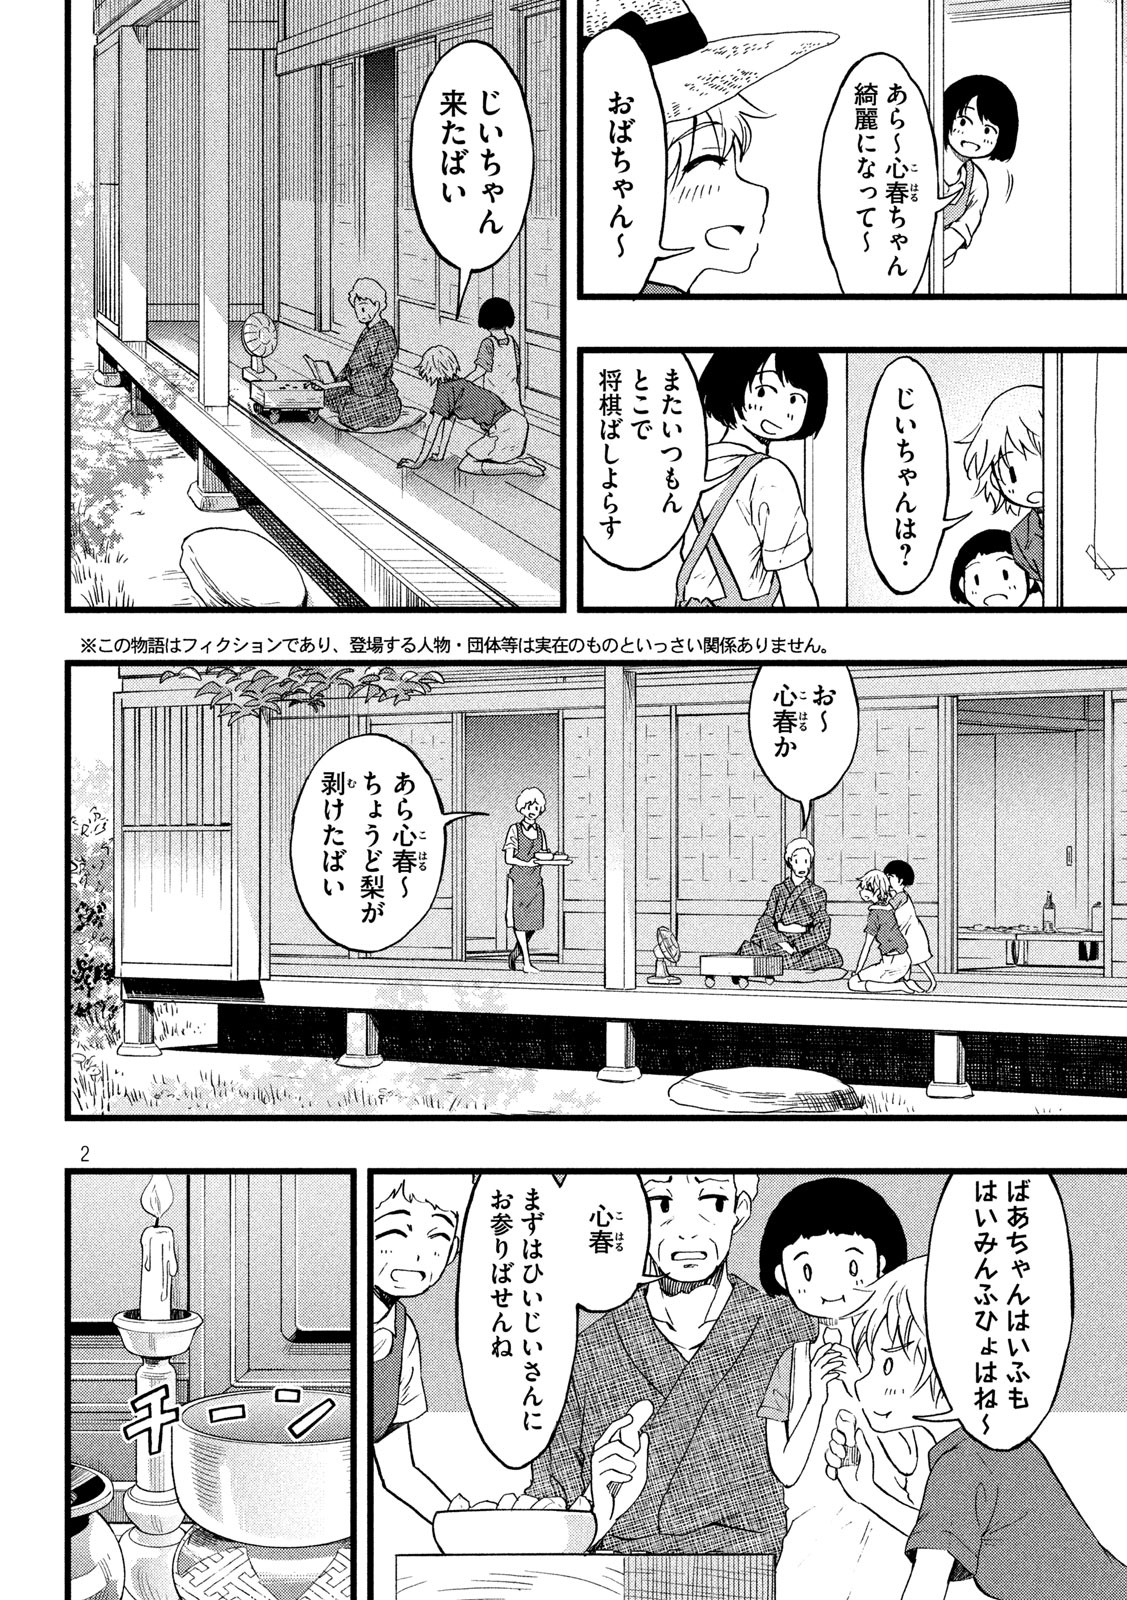 Koharu haru! - Chapter 37 - Page 2